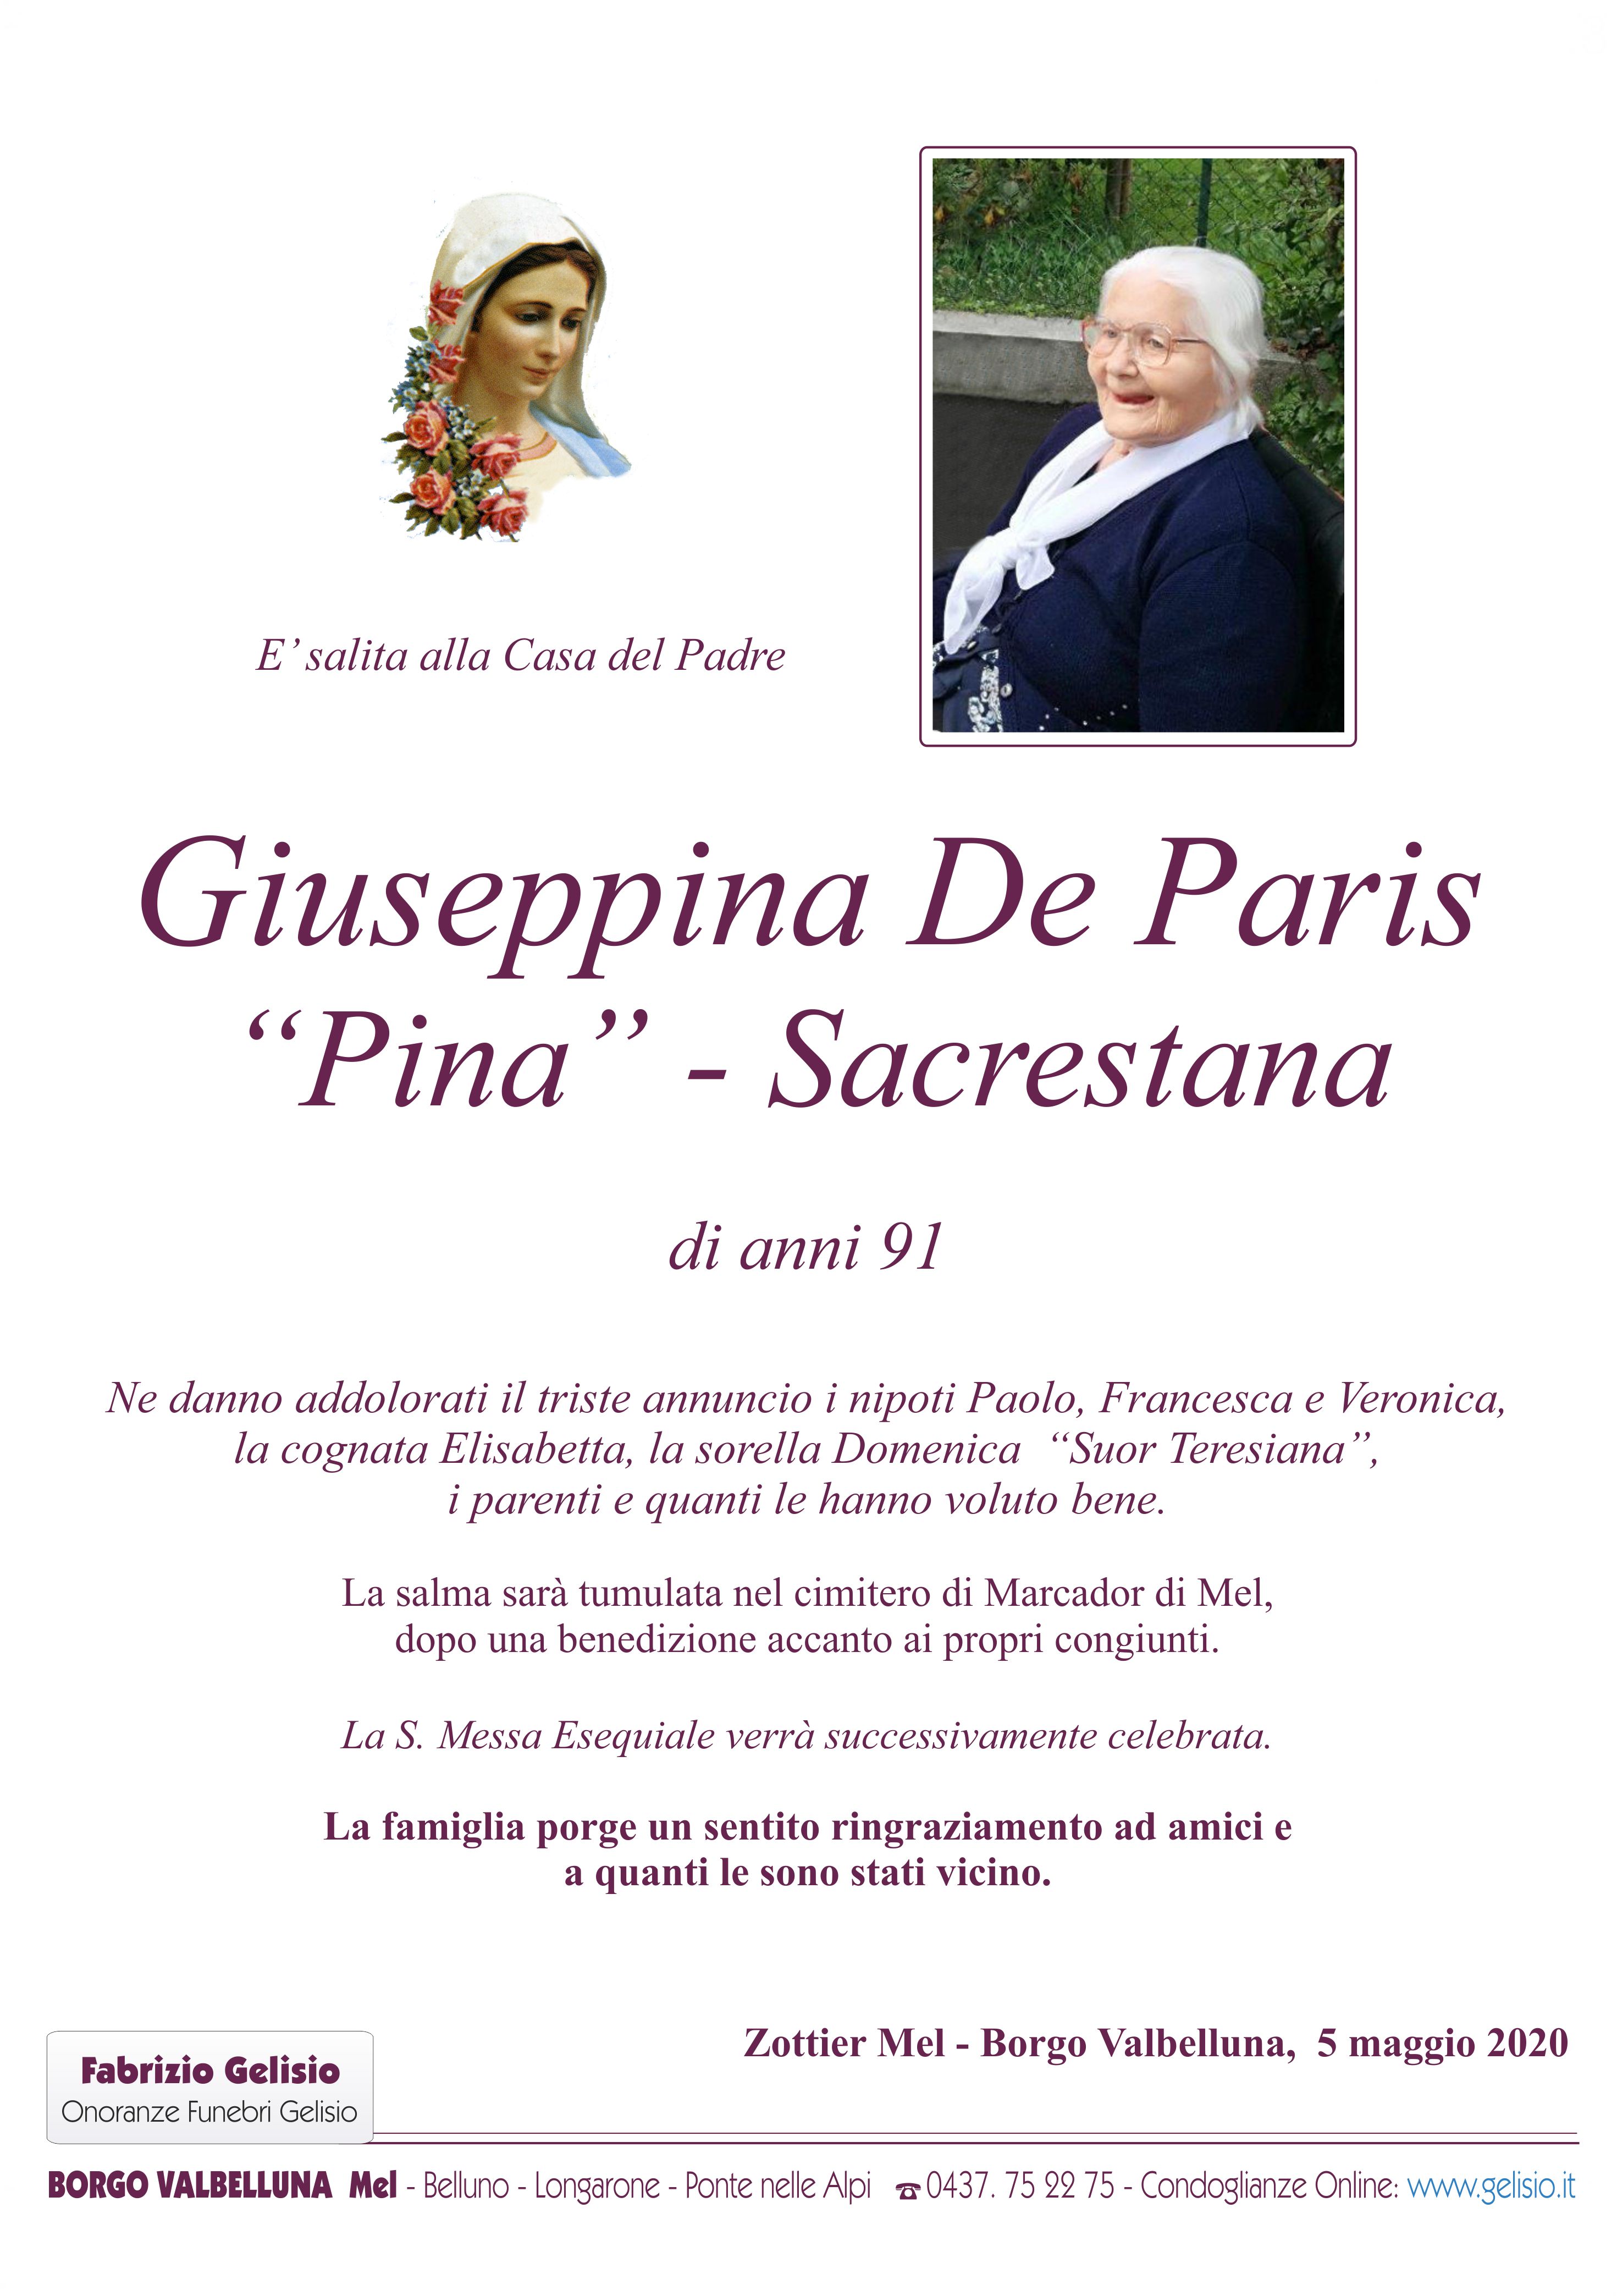 De Paris Giuseppina